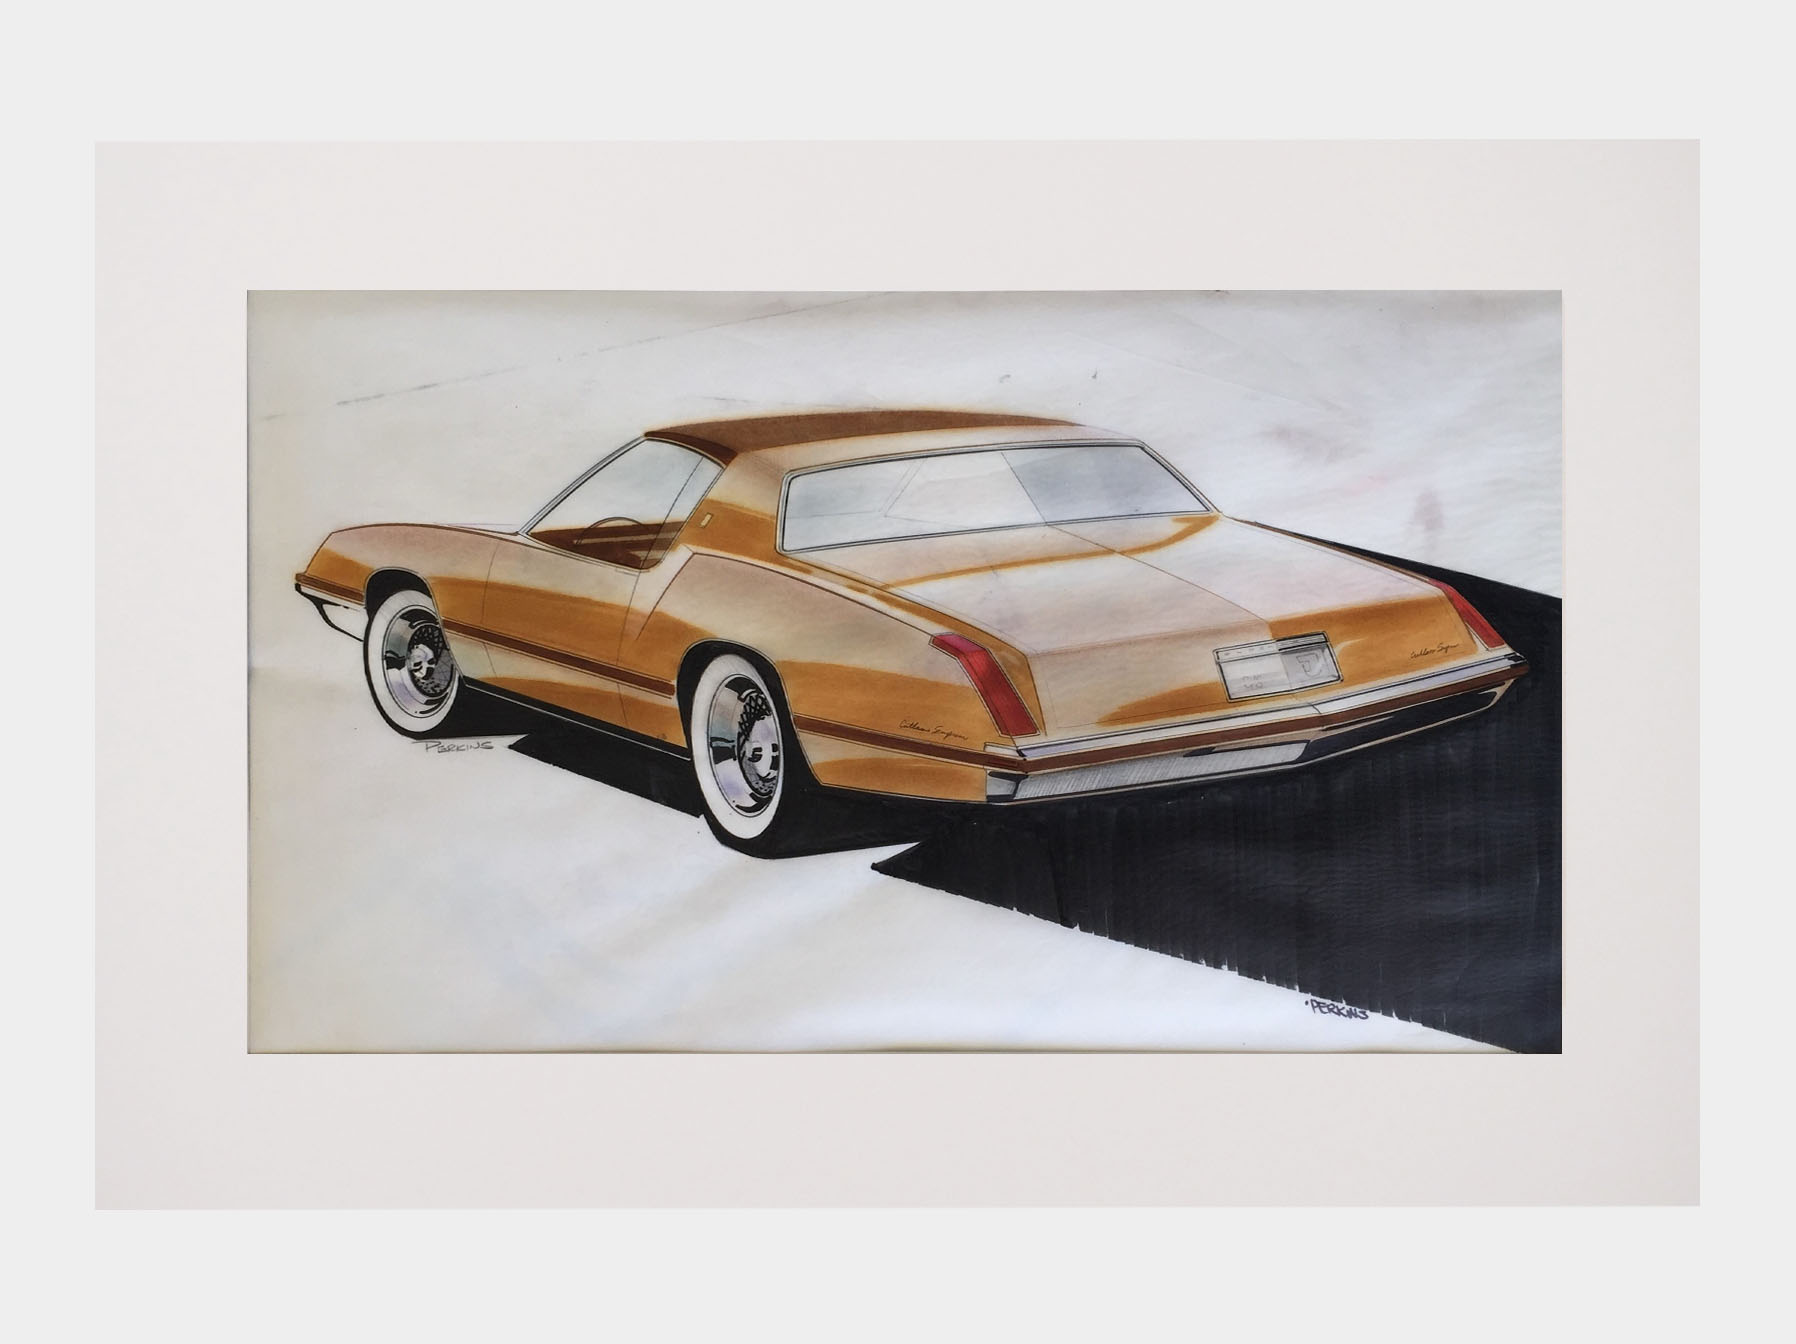 John Perkins Oldsmobile Cutlass Supreme 1970 (Marker and Gouache on paper)